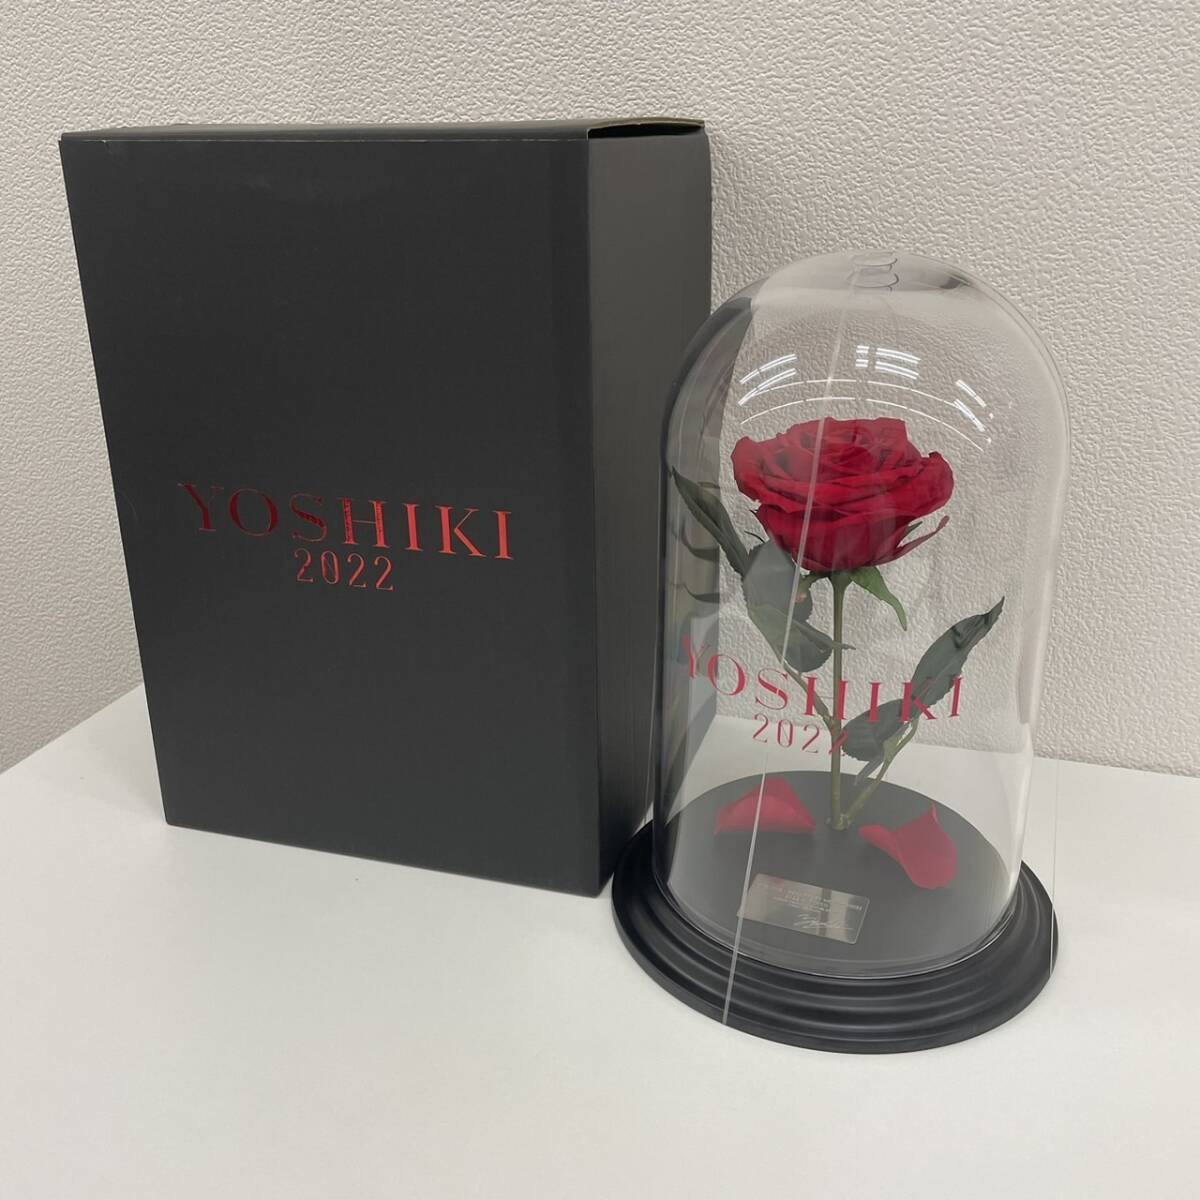 [HPF-4132] 1 jpy ~ Blizzard flower YOSHIKI 2022 EVENING / BREAKFAST with YOSHIKI 2022 in TOKYO red rose rose present condition storage goods 